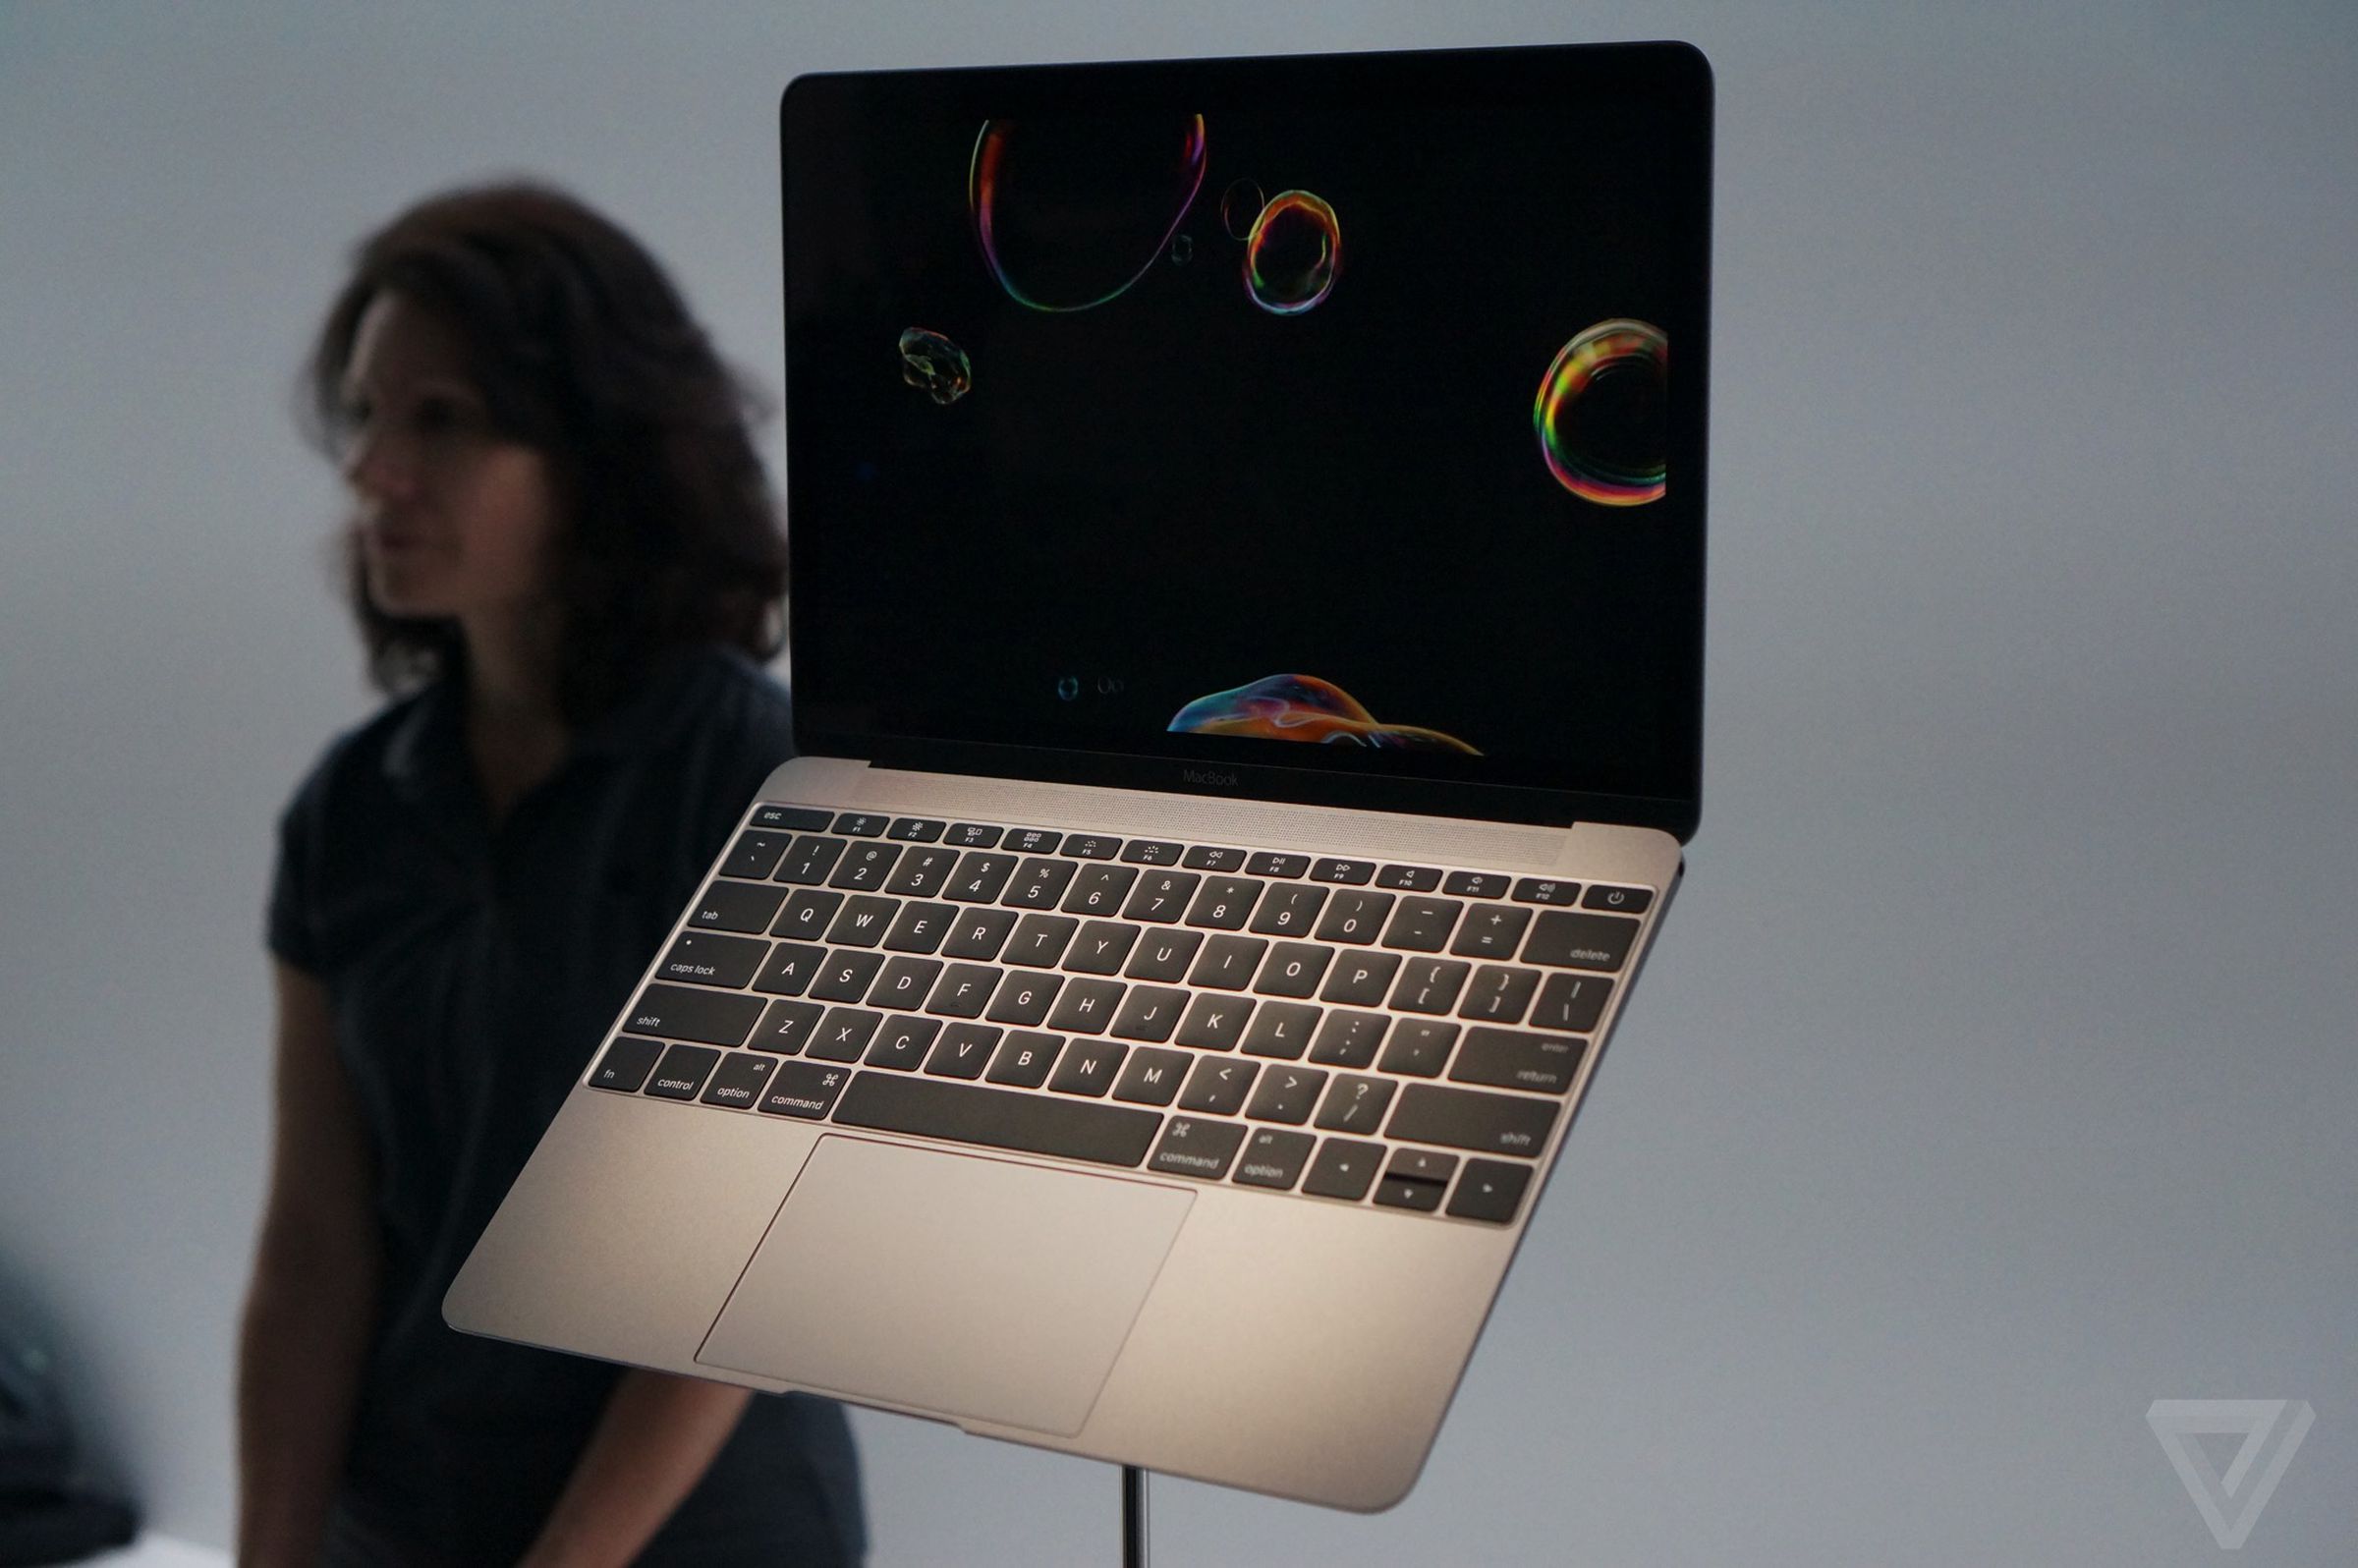 The new Macbook with Retina Display hands-on photos